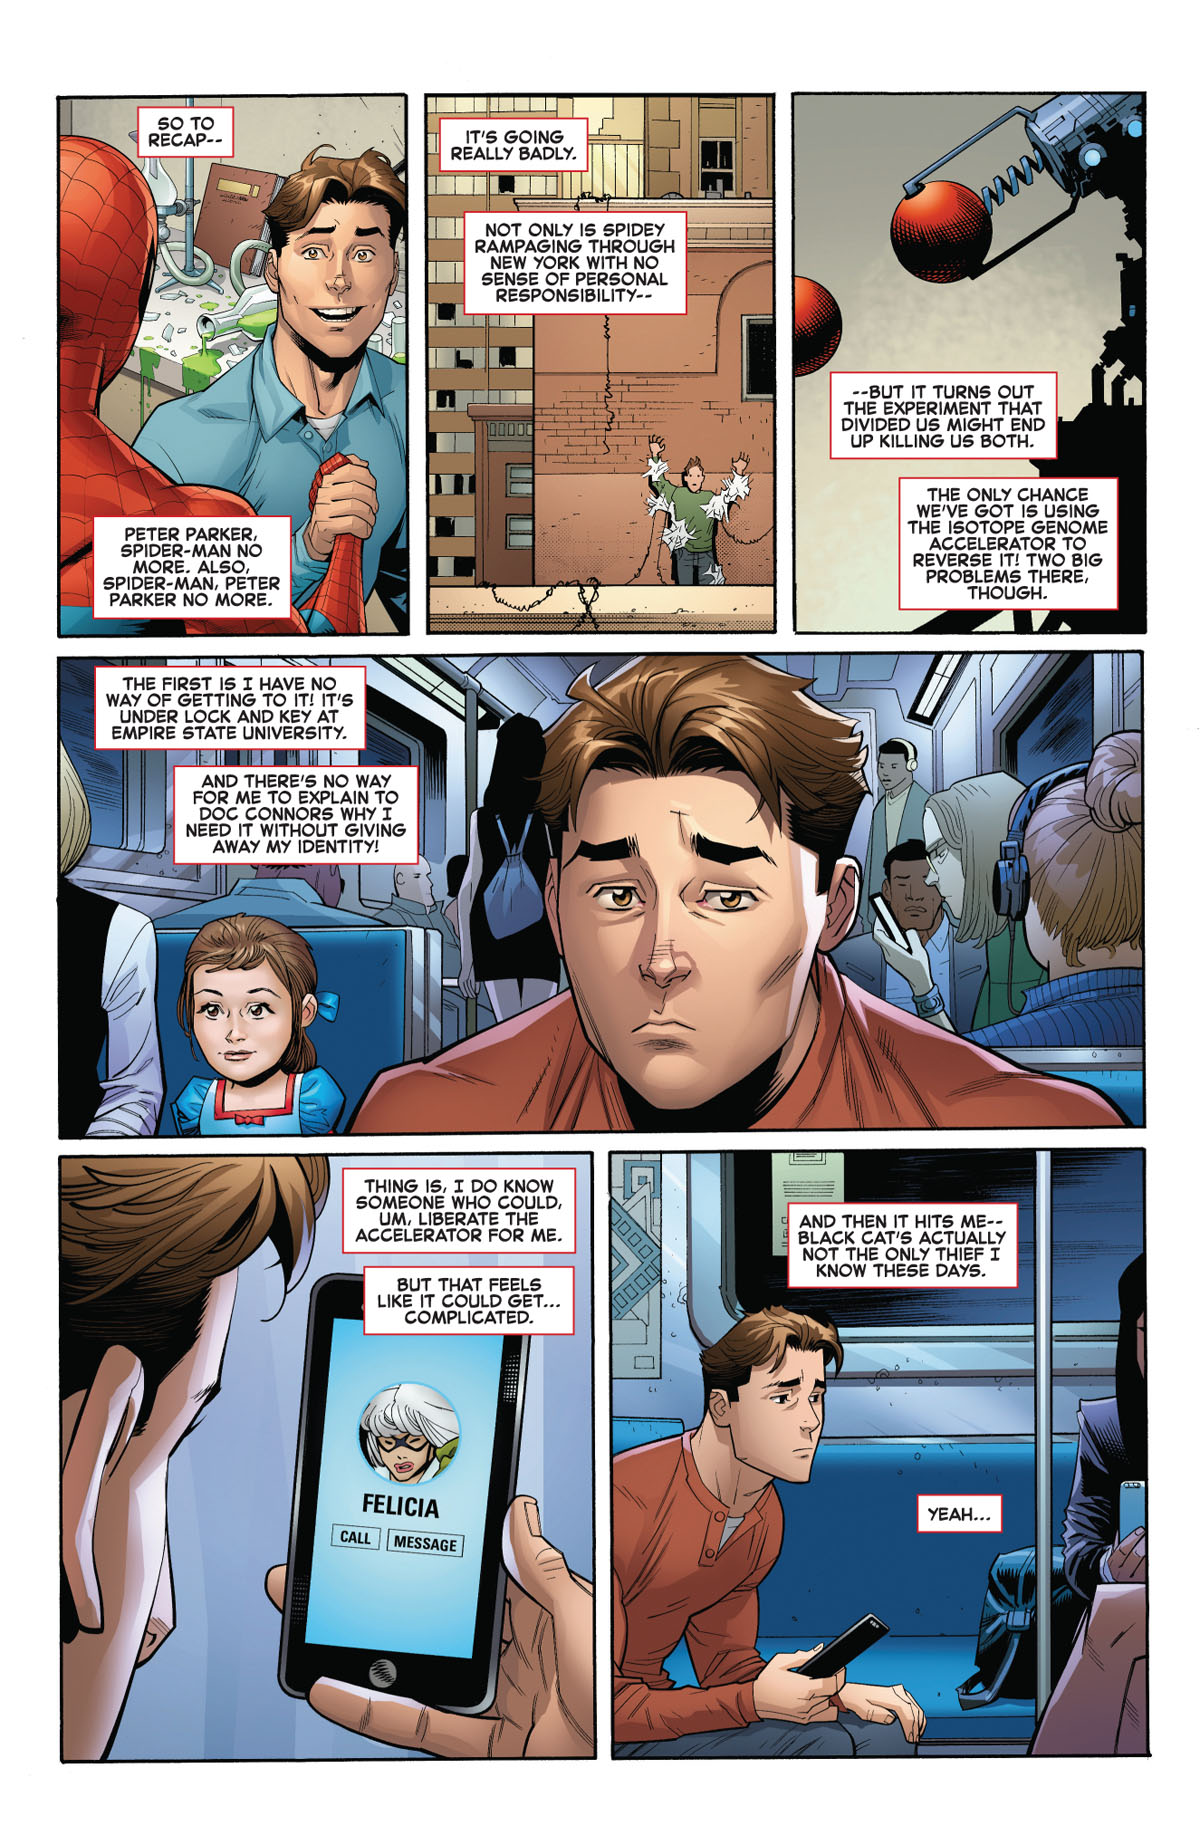 Amazing Spider-Man #5 page 3